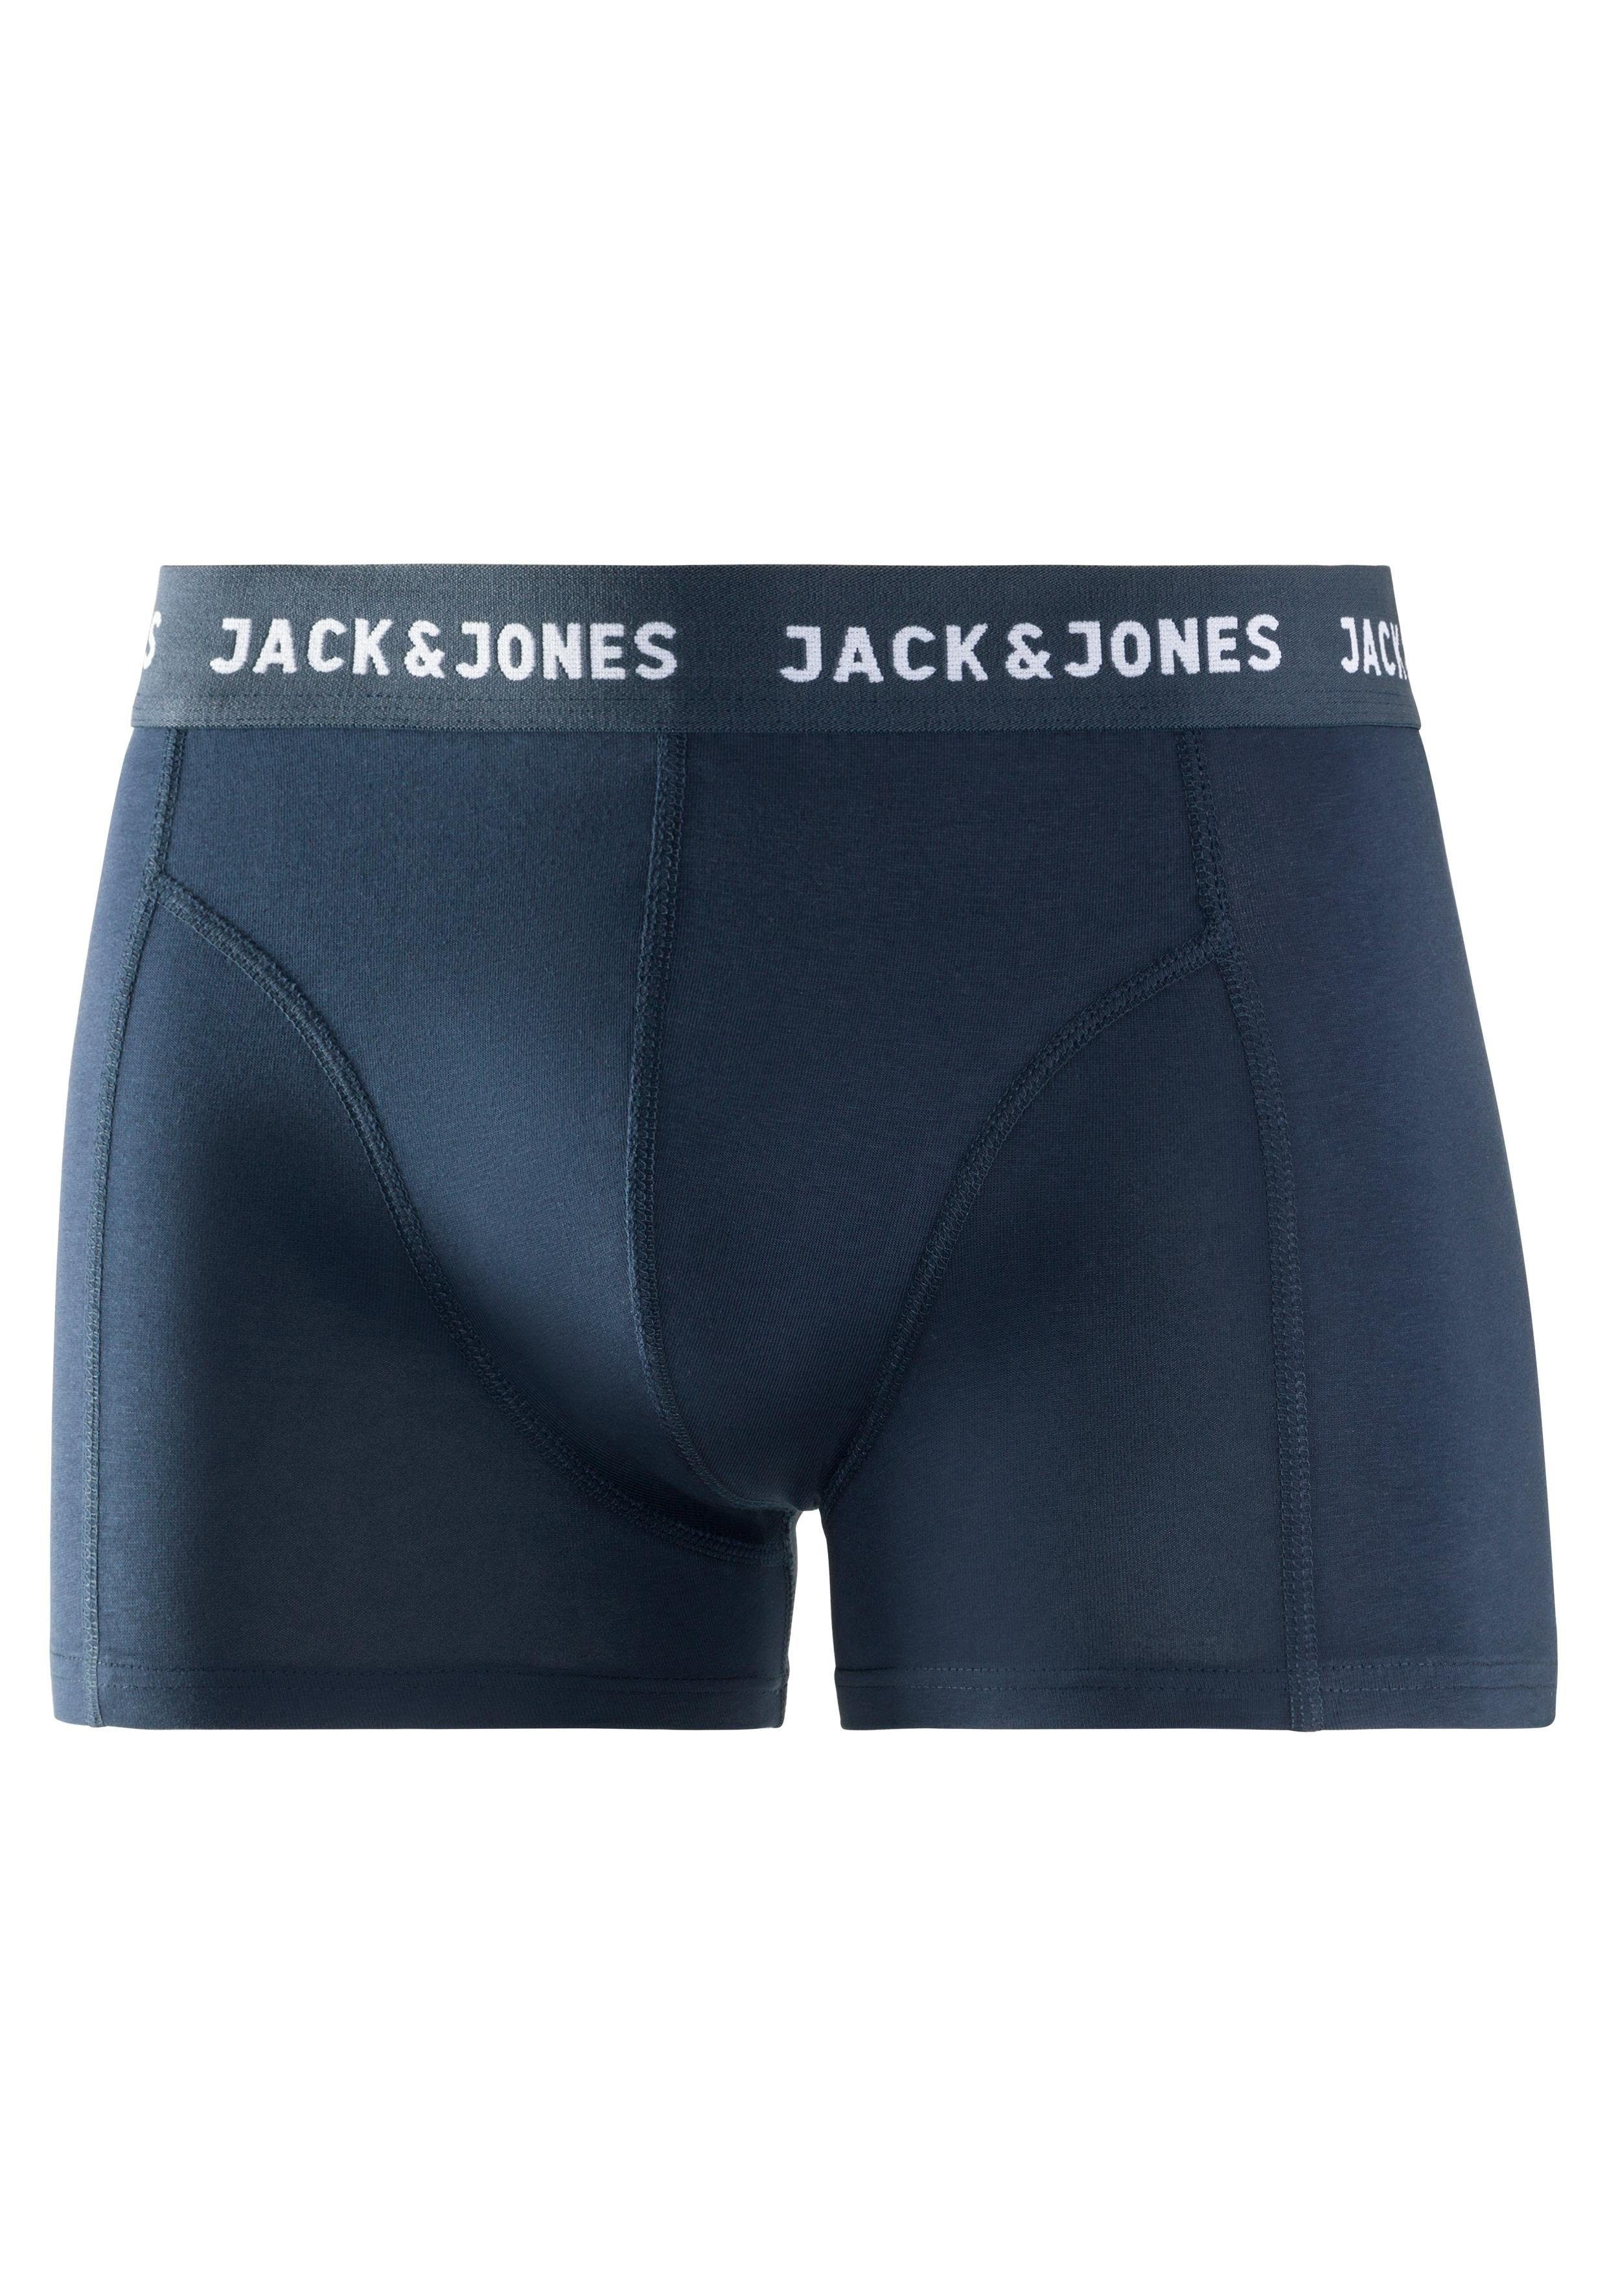 Jack & Jones Logowebbund navy (Packung, 3-St) Boxer mit